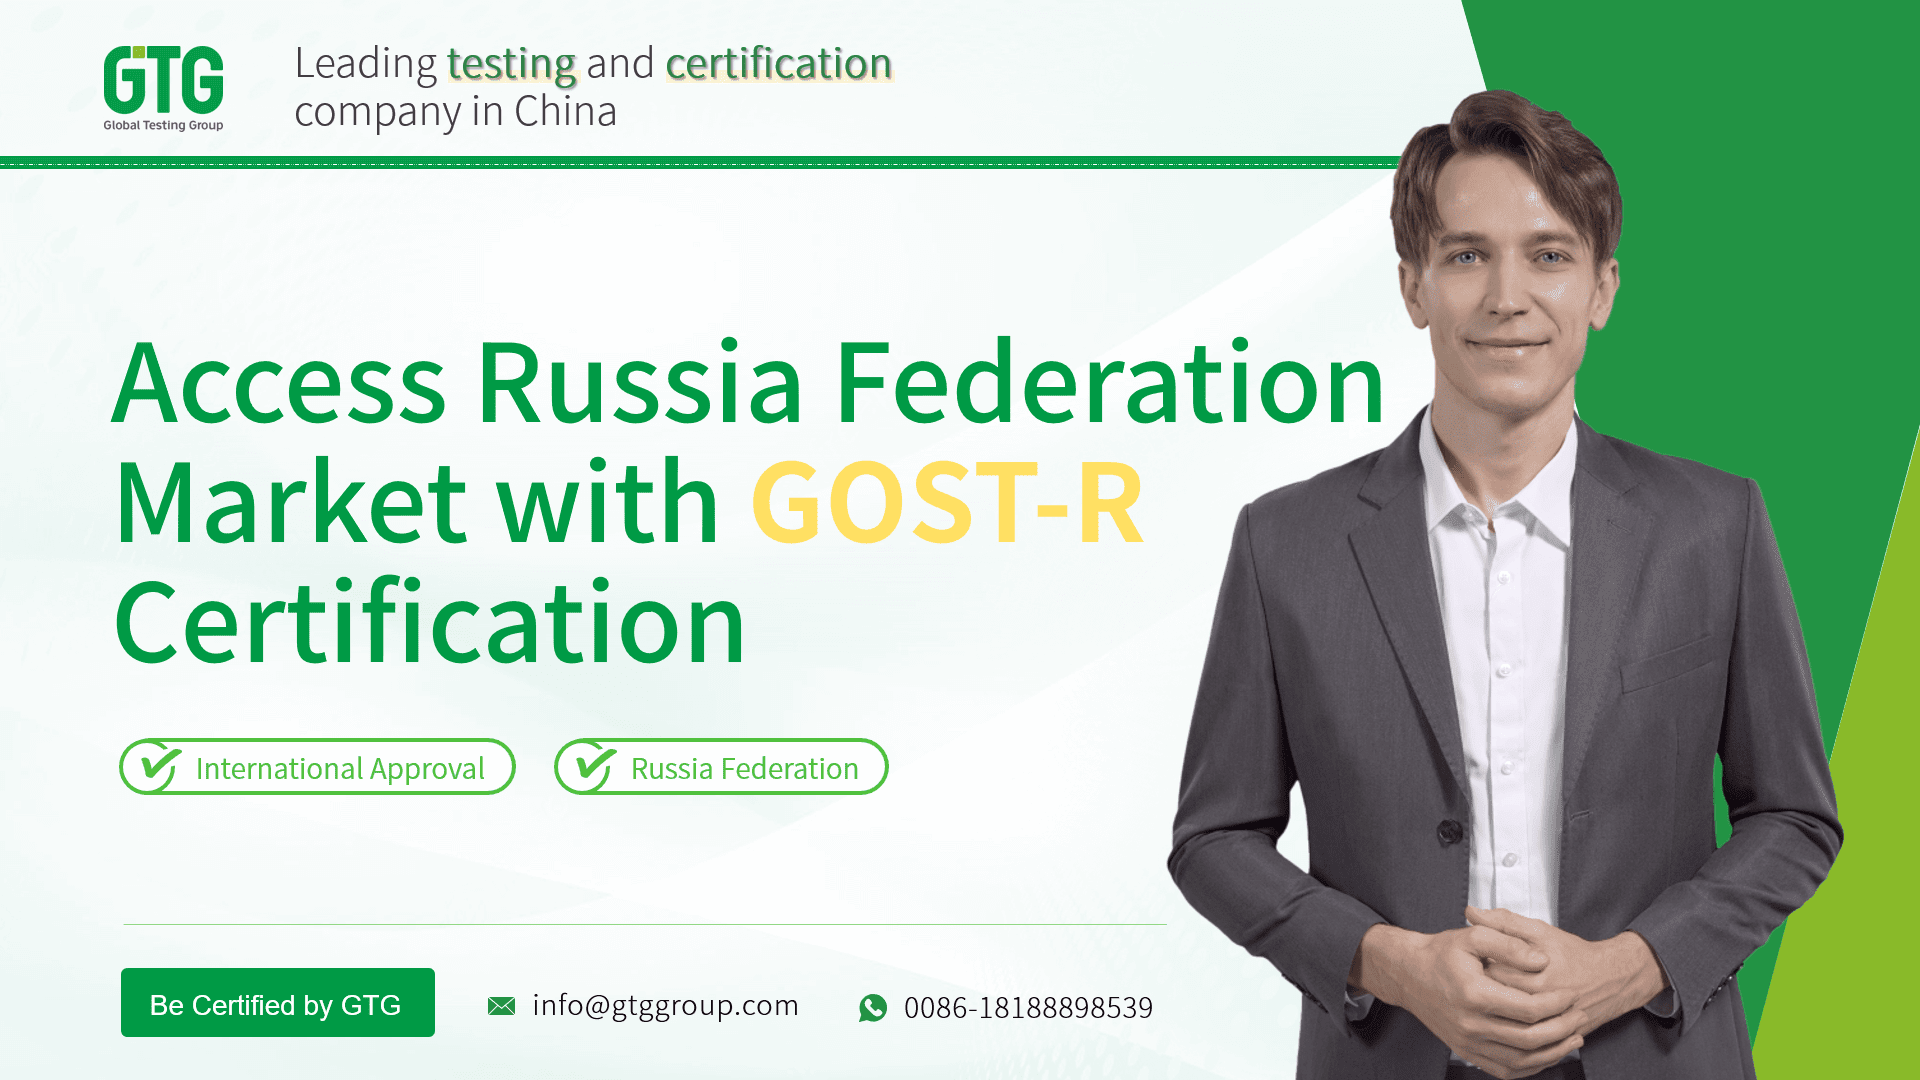 GTG Provides GOST-R Certification Recognition Service
